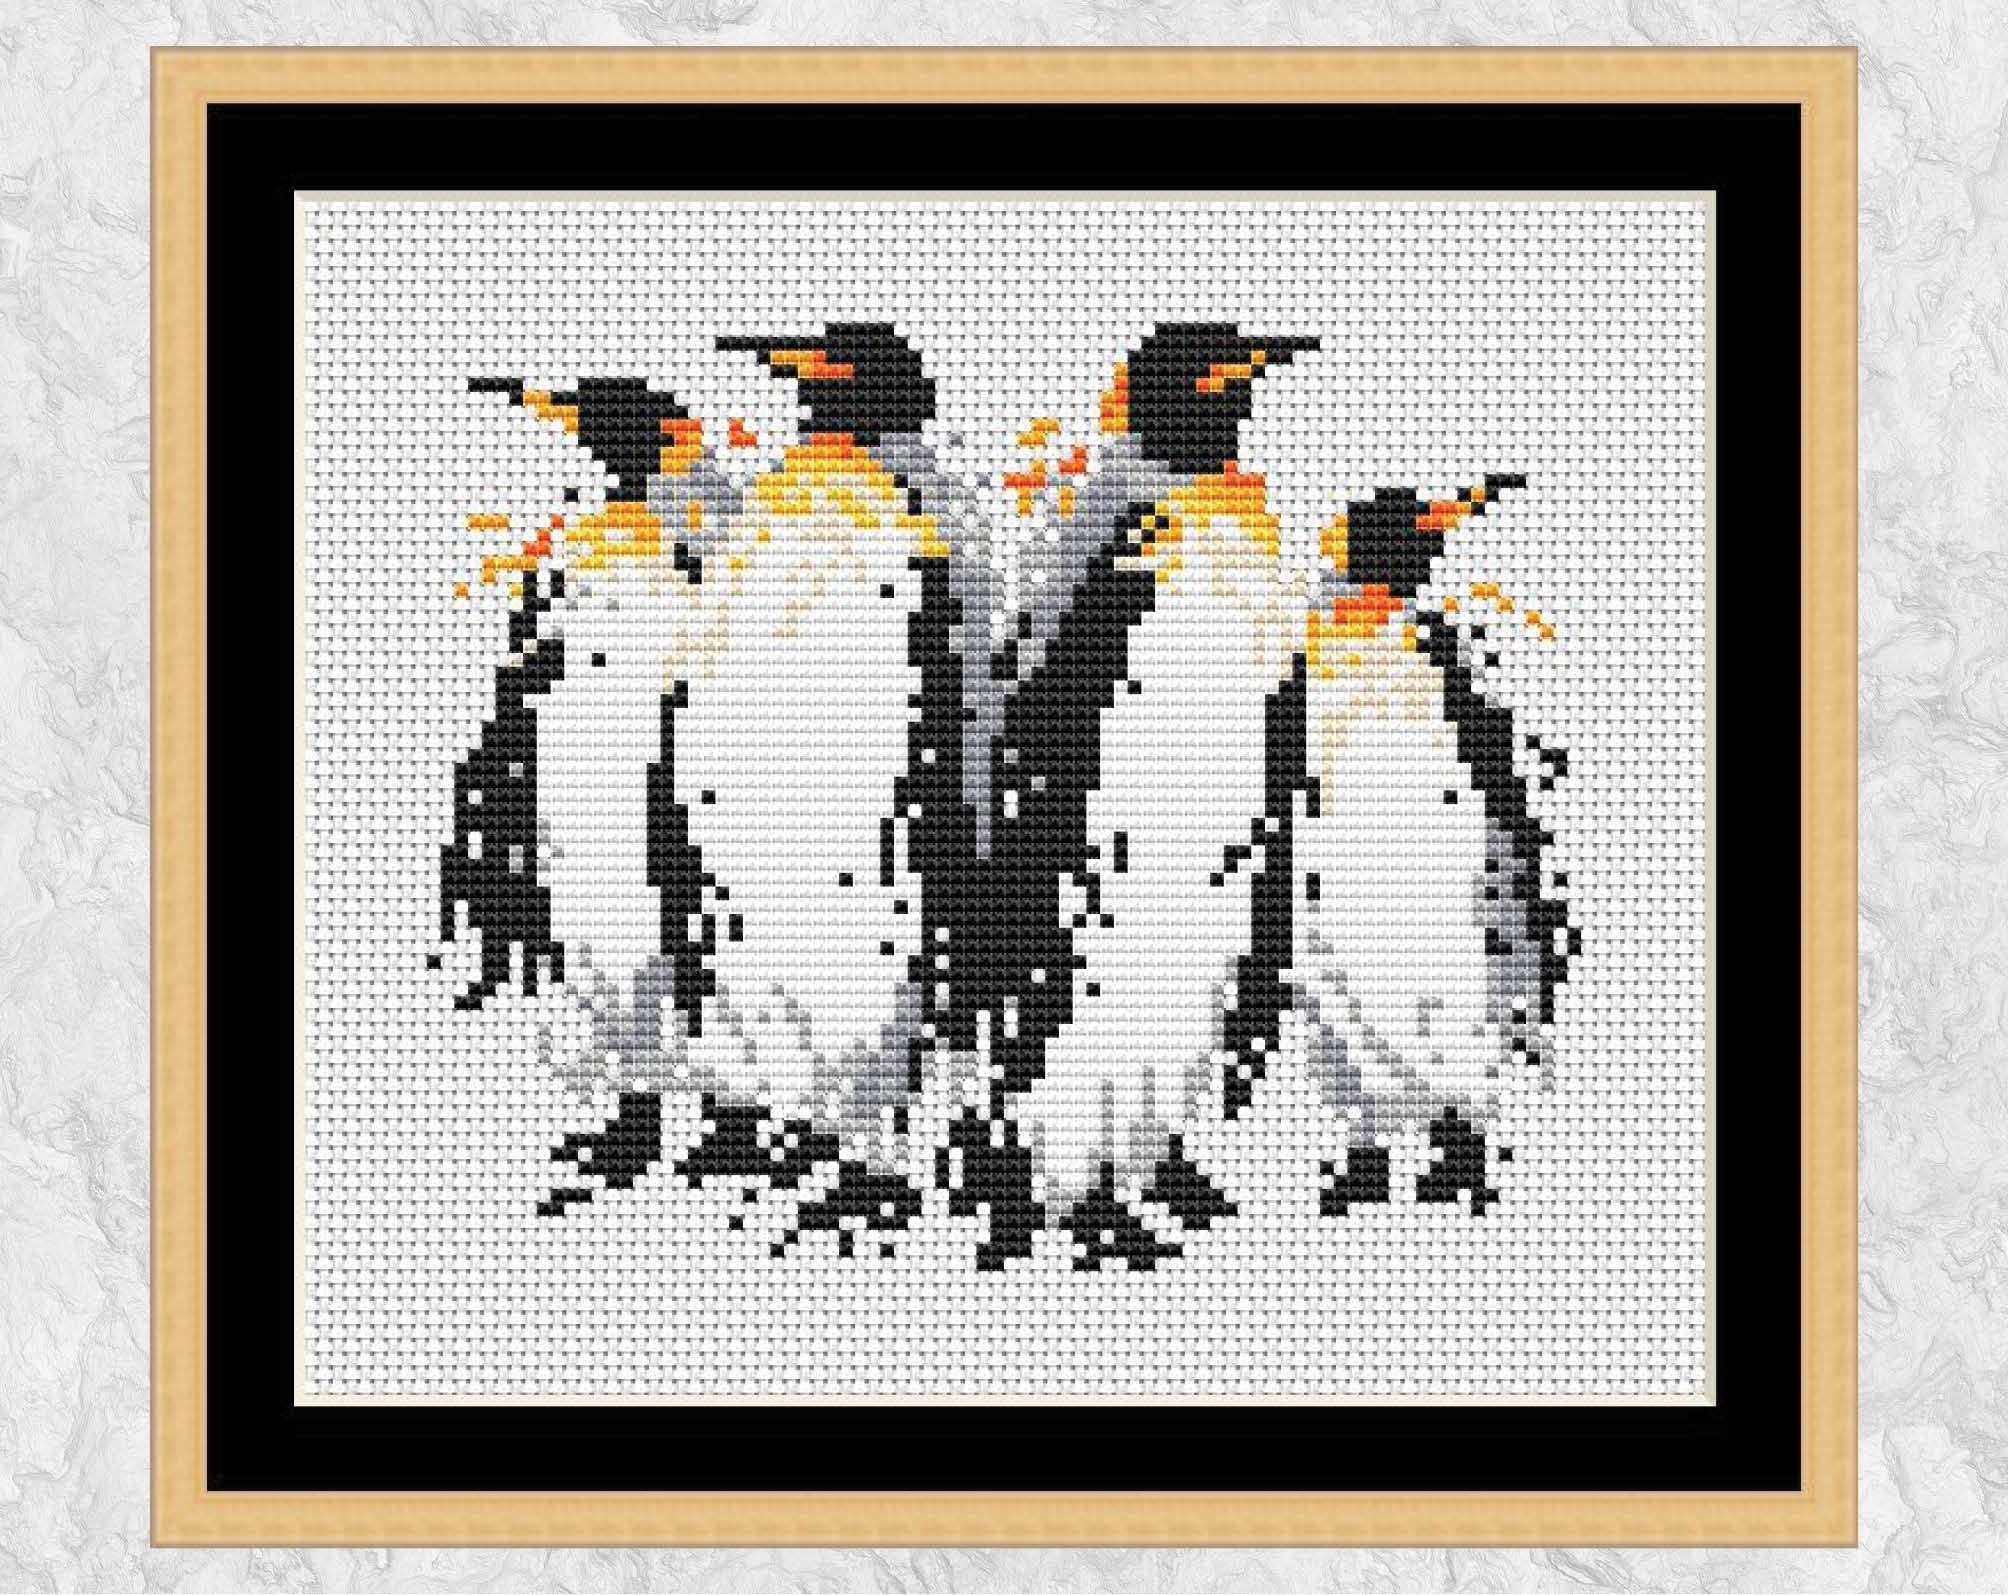 Splattered Paint Penguins cross stitch pattern